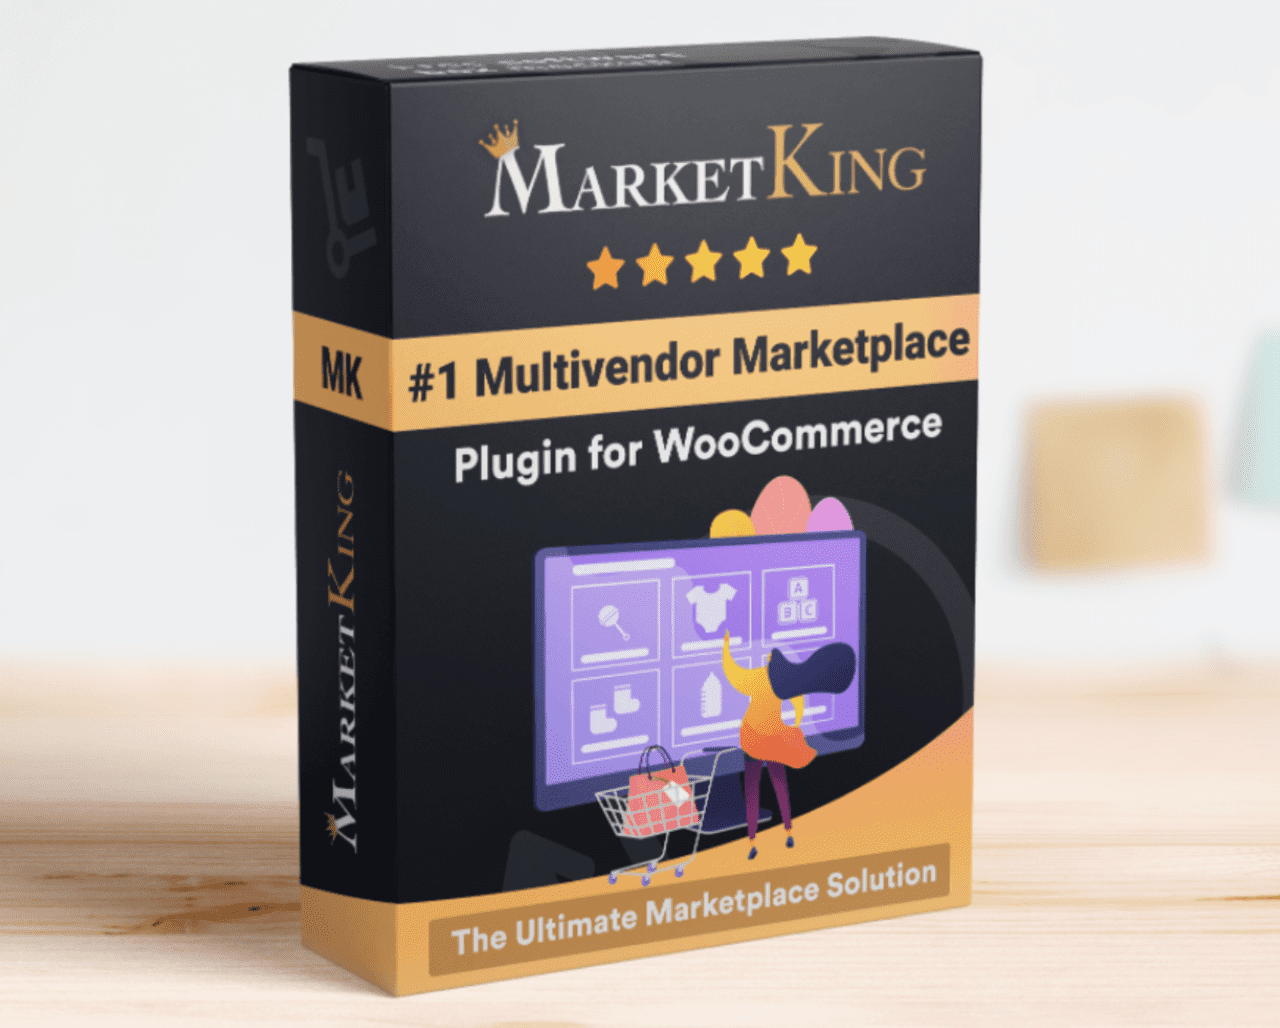 MarketKing Product Box